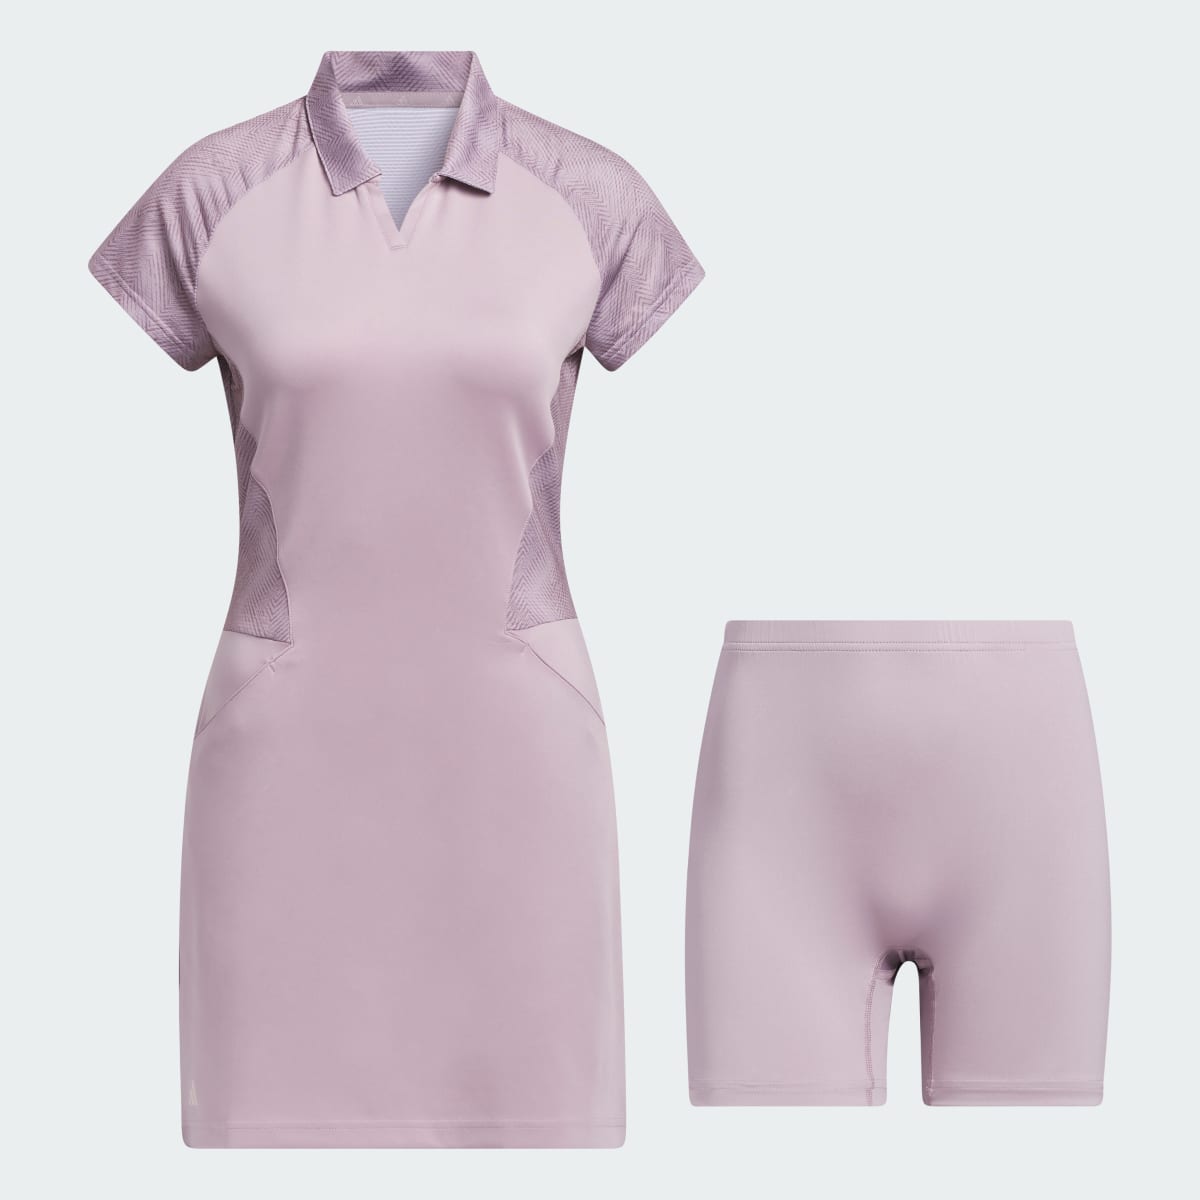 Adidas Women's Ultimate365 Short Sleeve Dress. 5